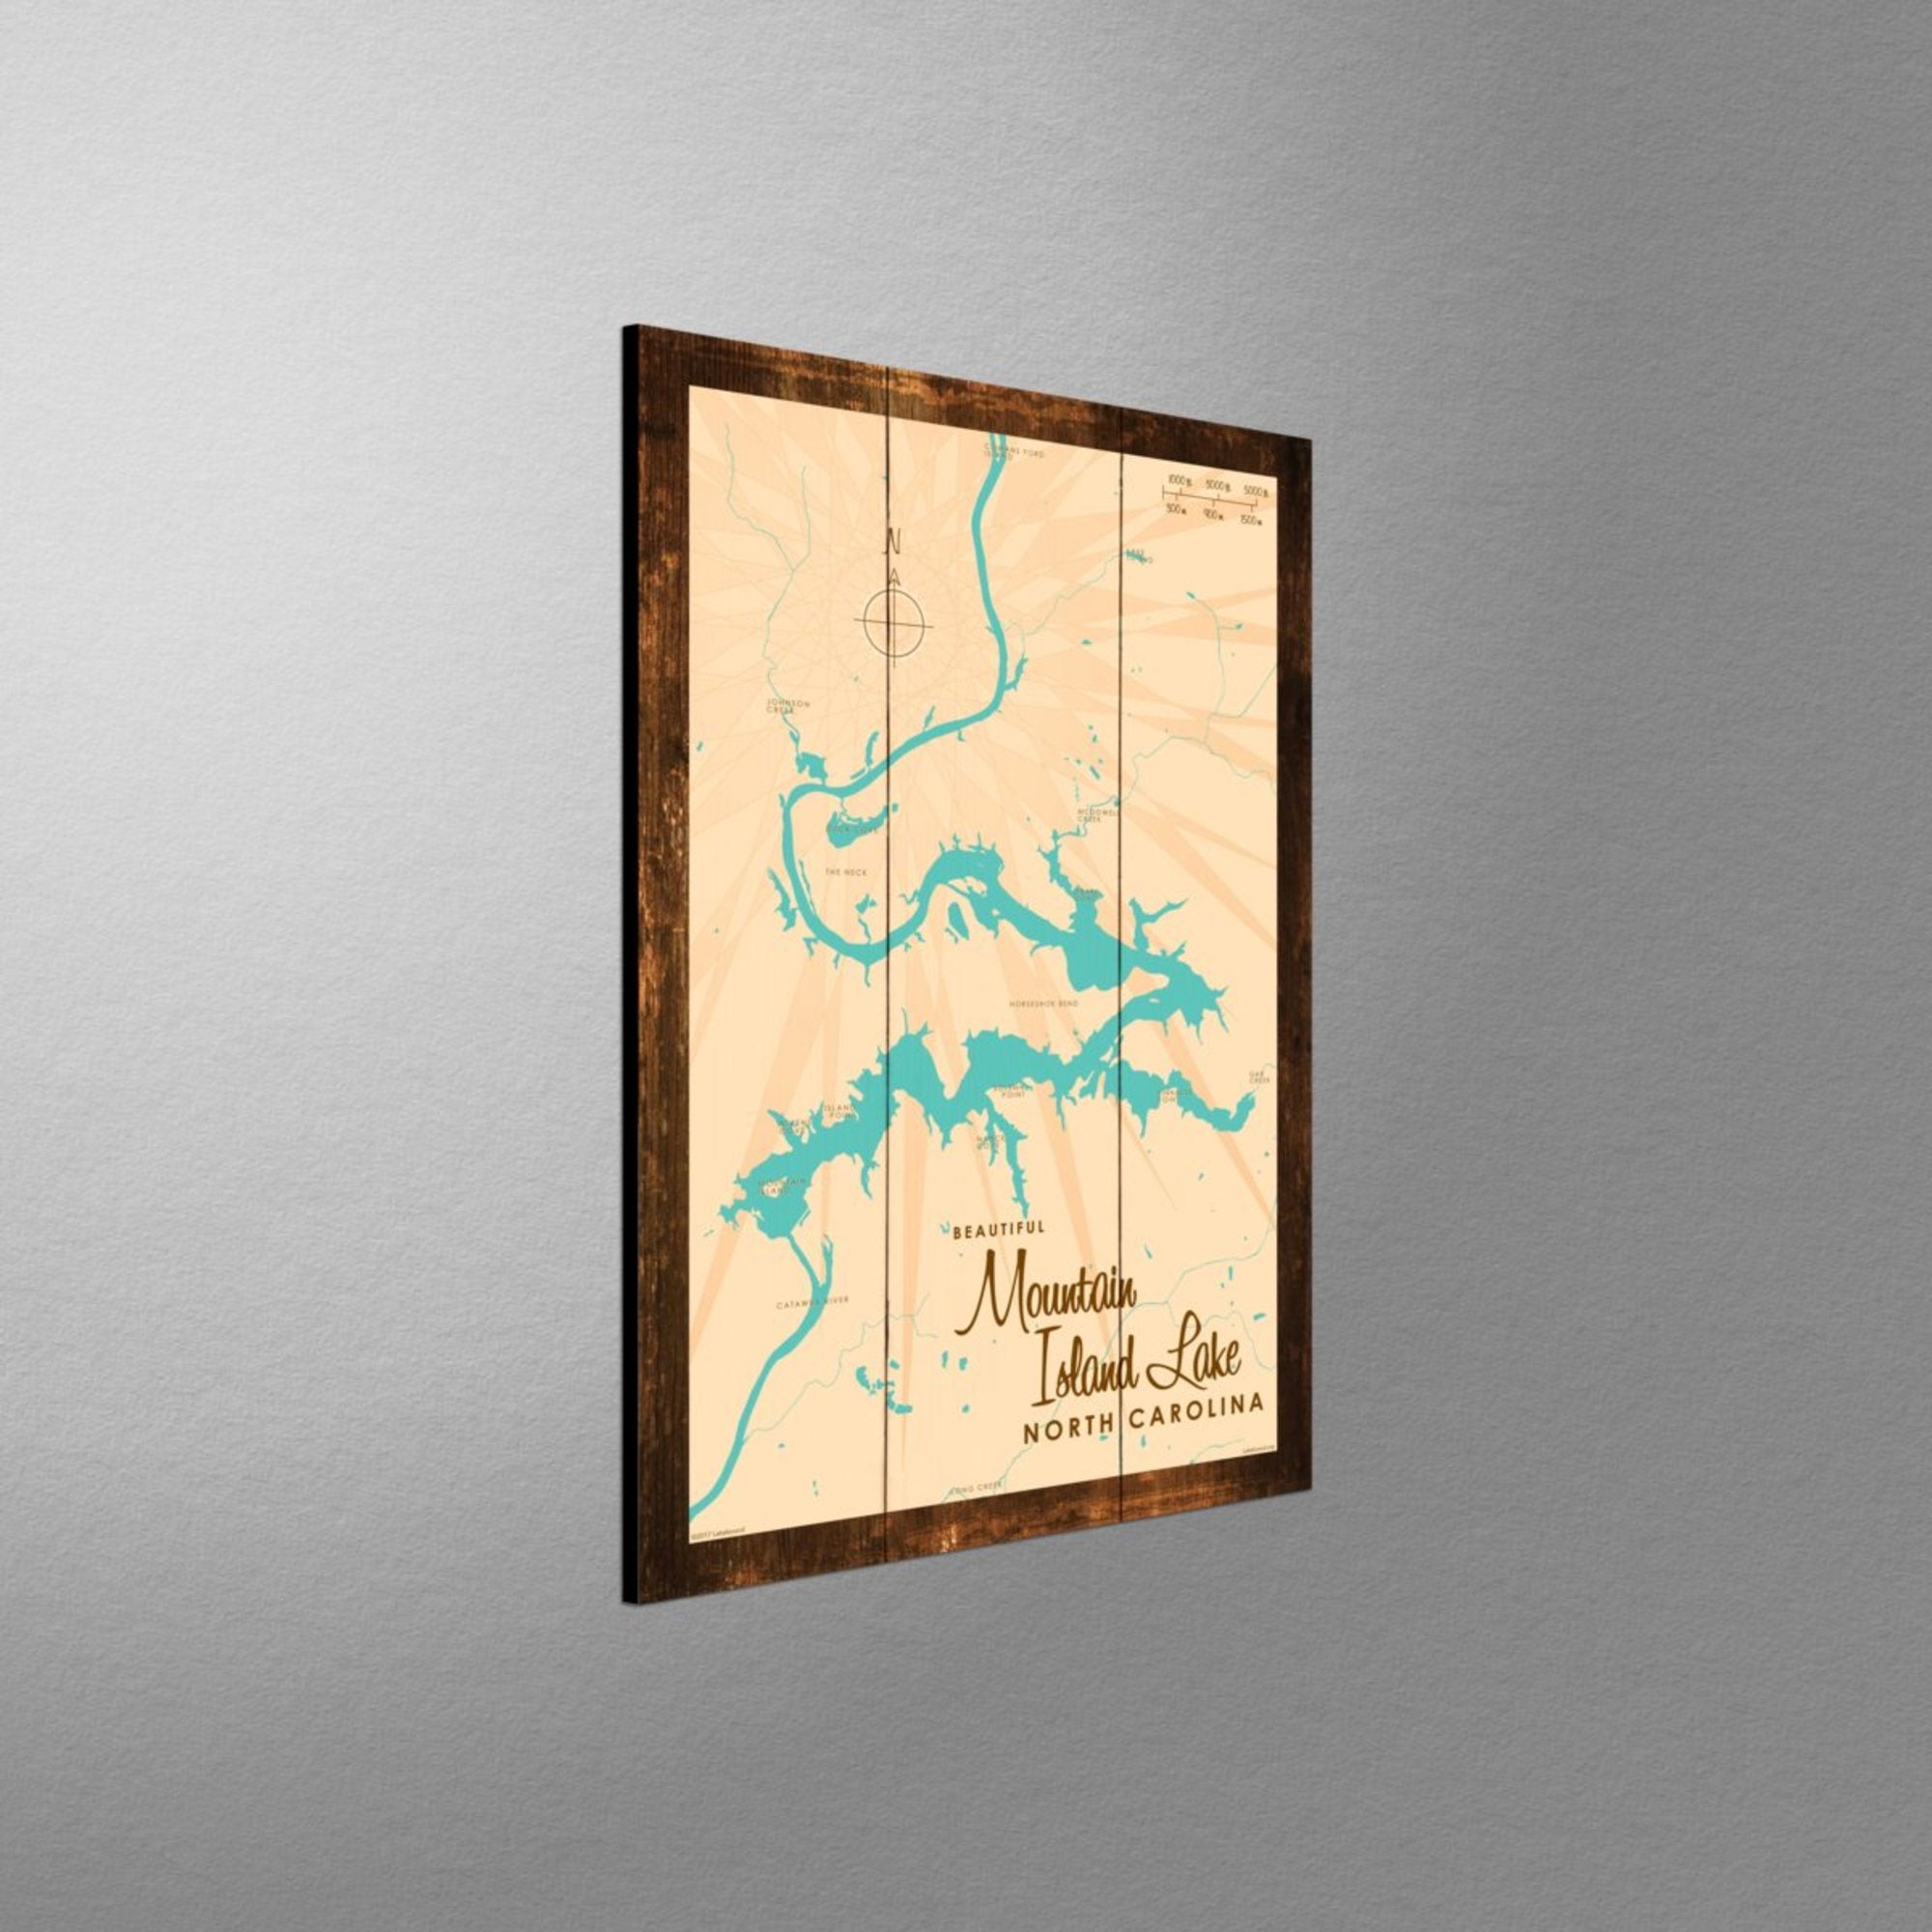 Mountain Island Lake North Carolina, Rustic Wood Sign Map Art